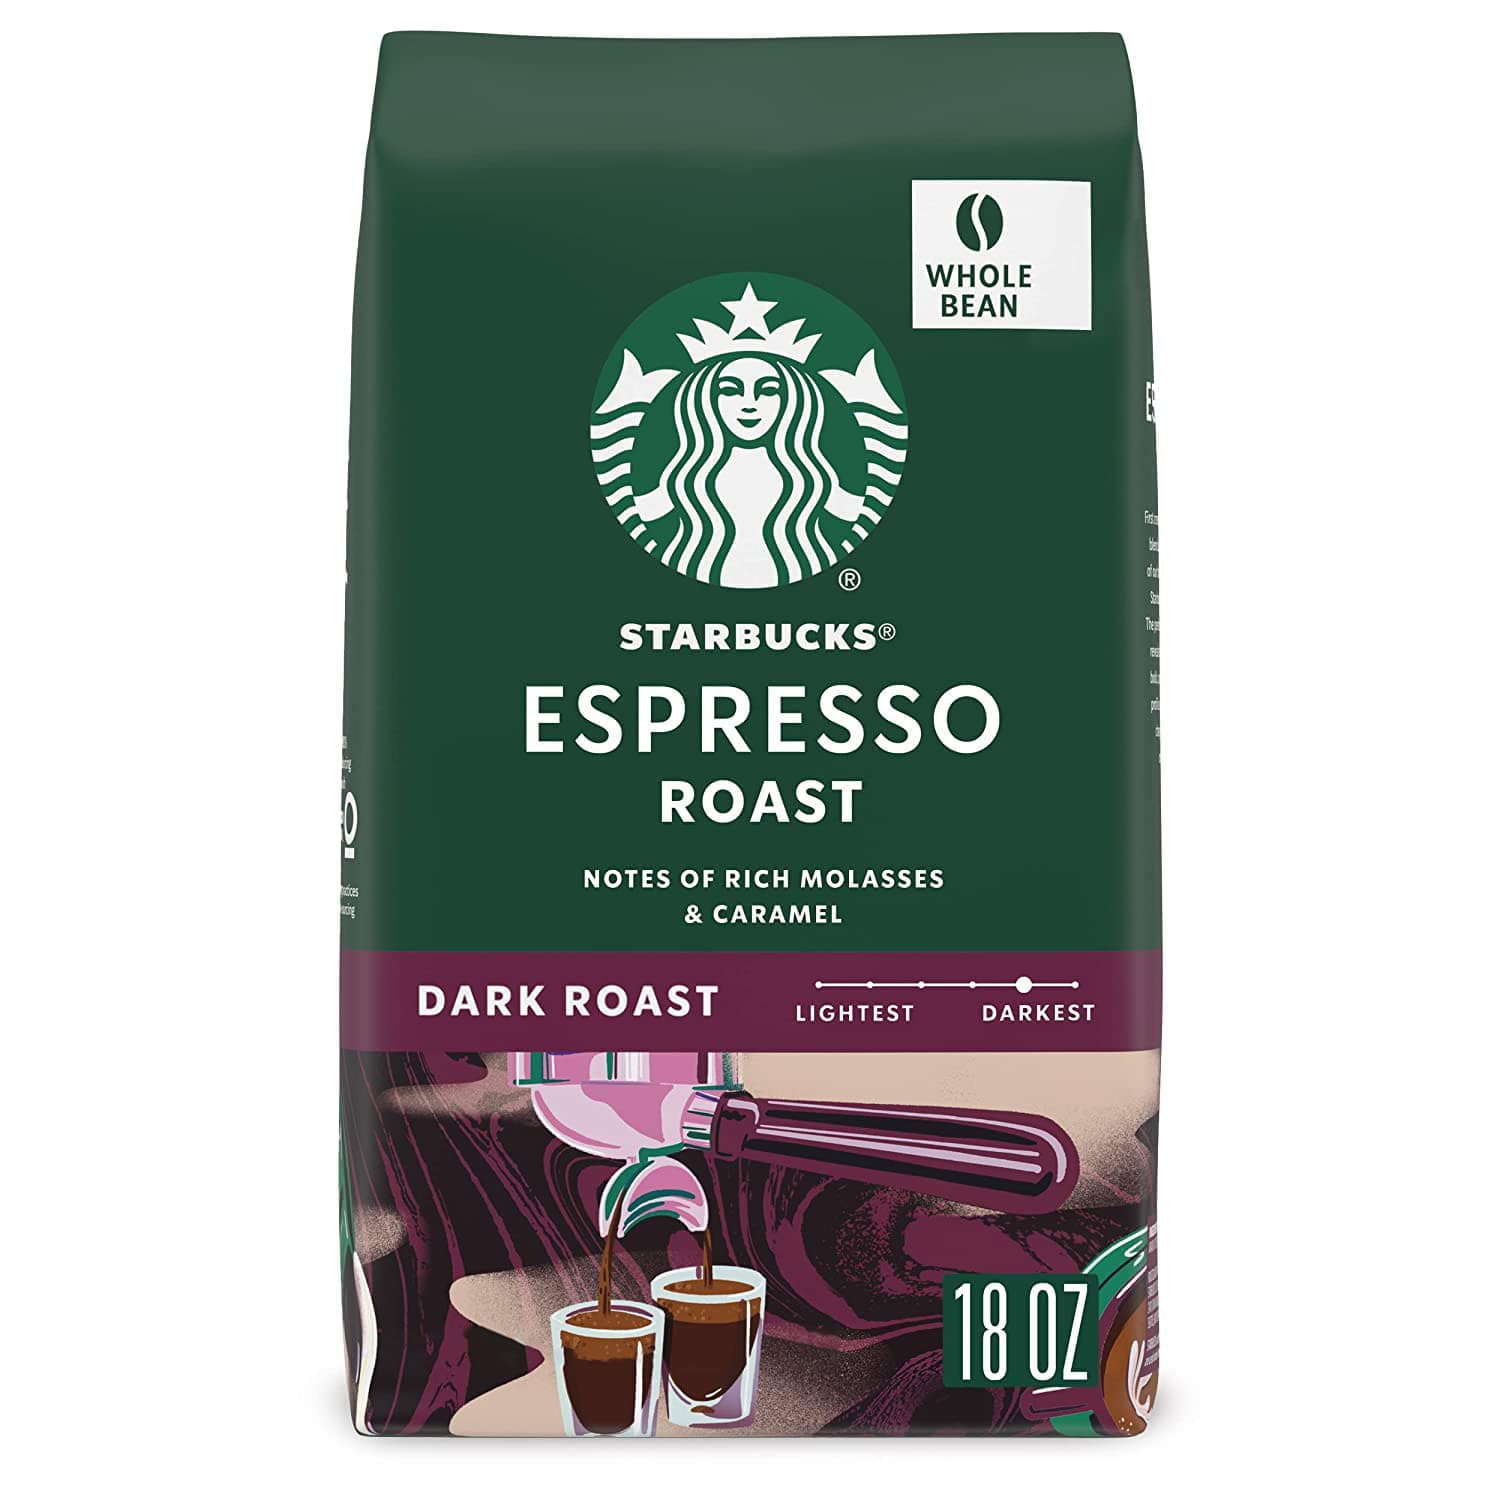 Starbucks-Espresso-Roast-Whole-Bean-Coffee